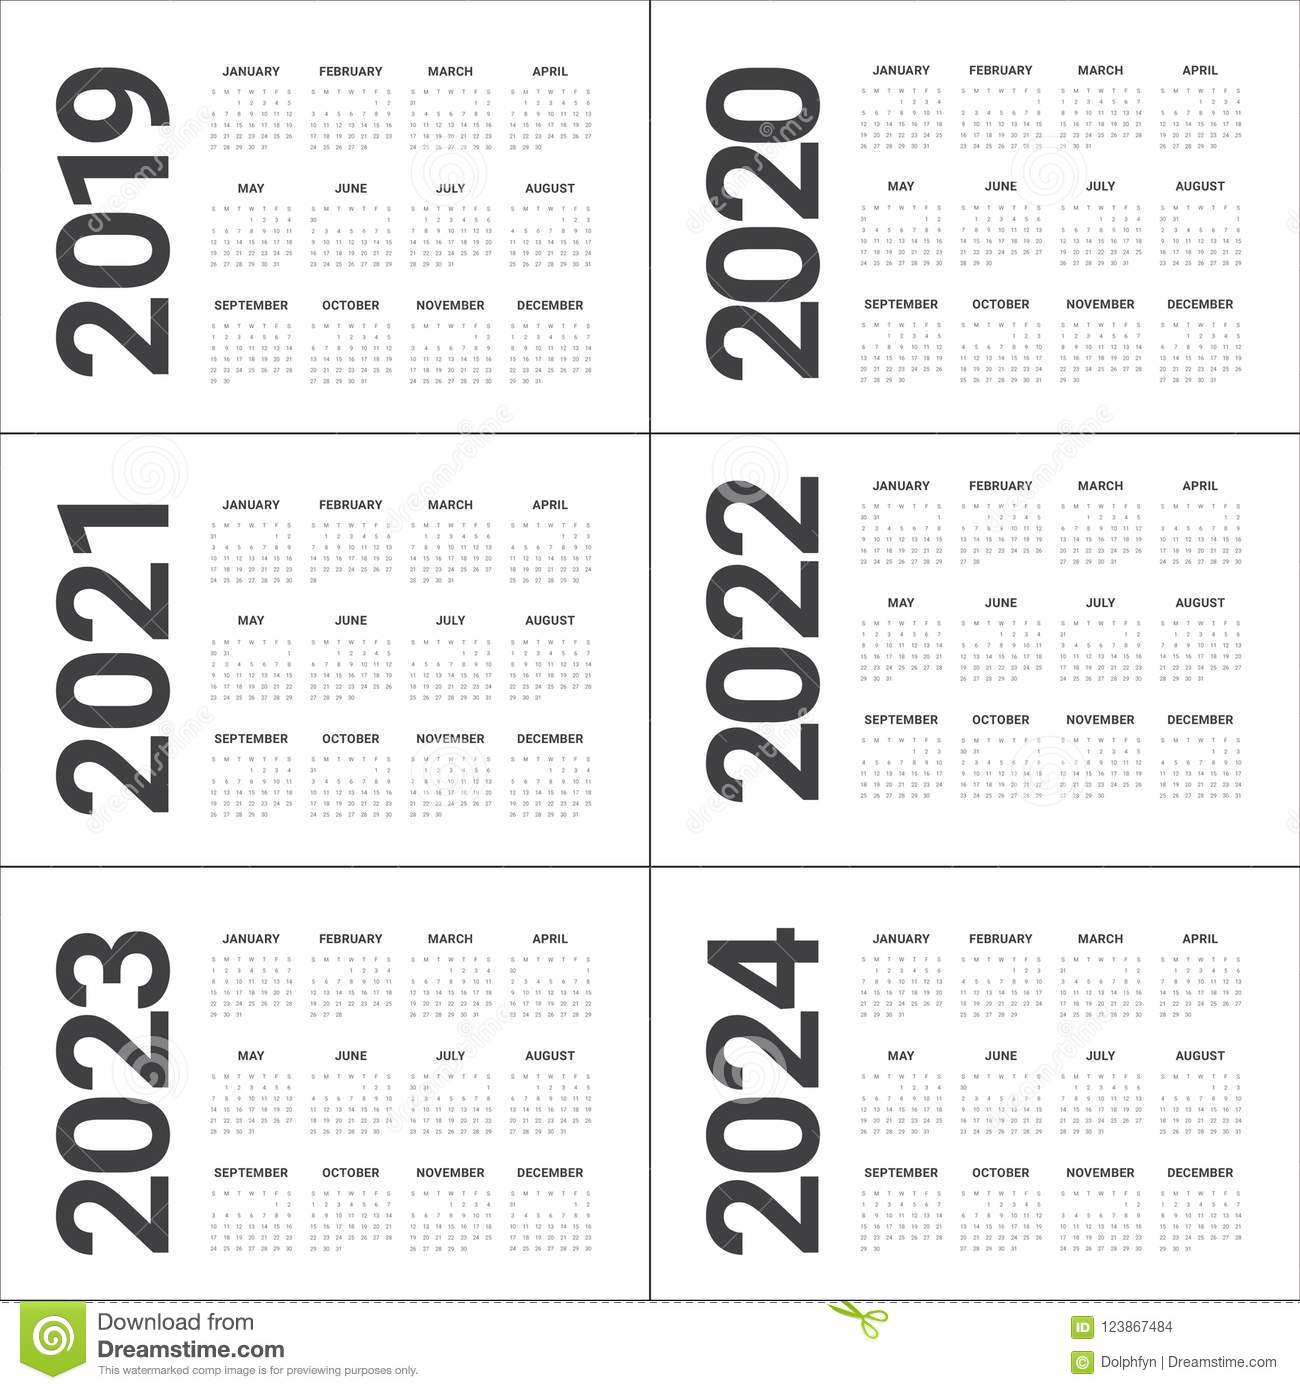 Three Year Printable Calendar 2021 To 2023 | Calendar ...